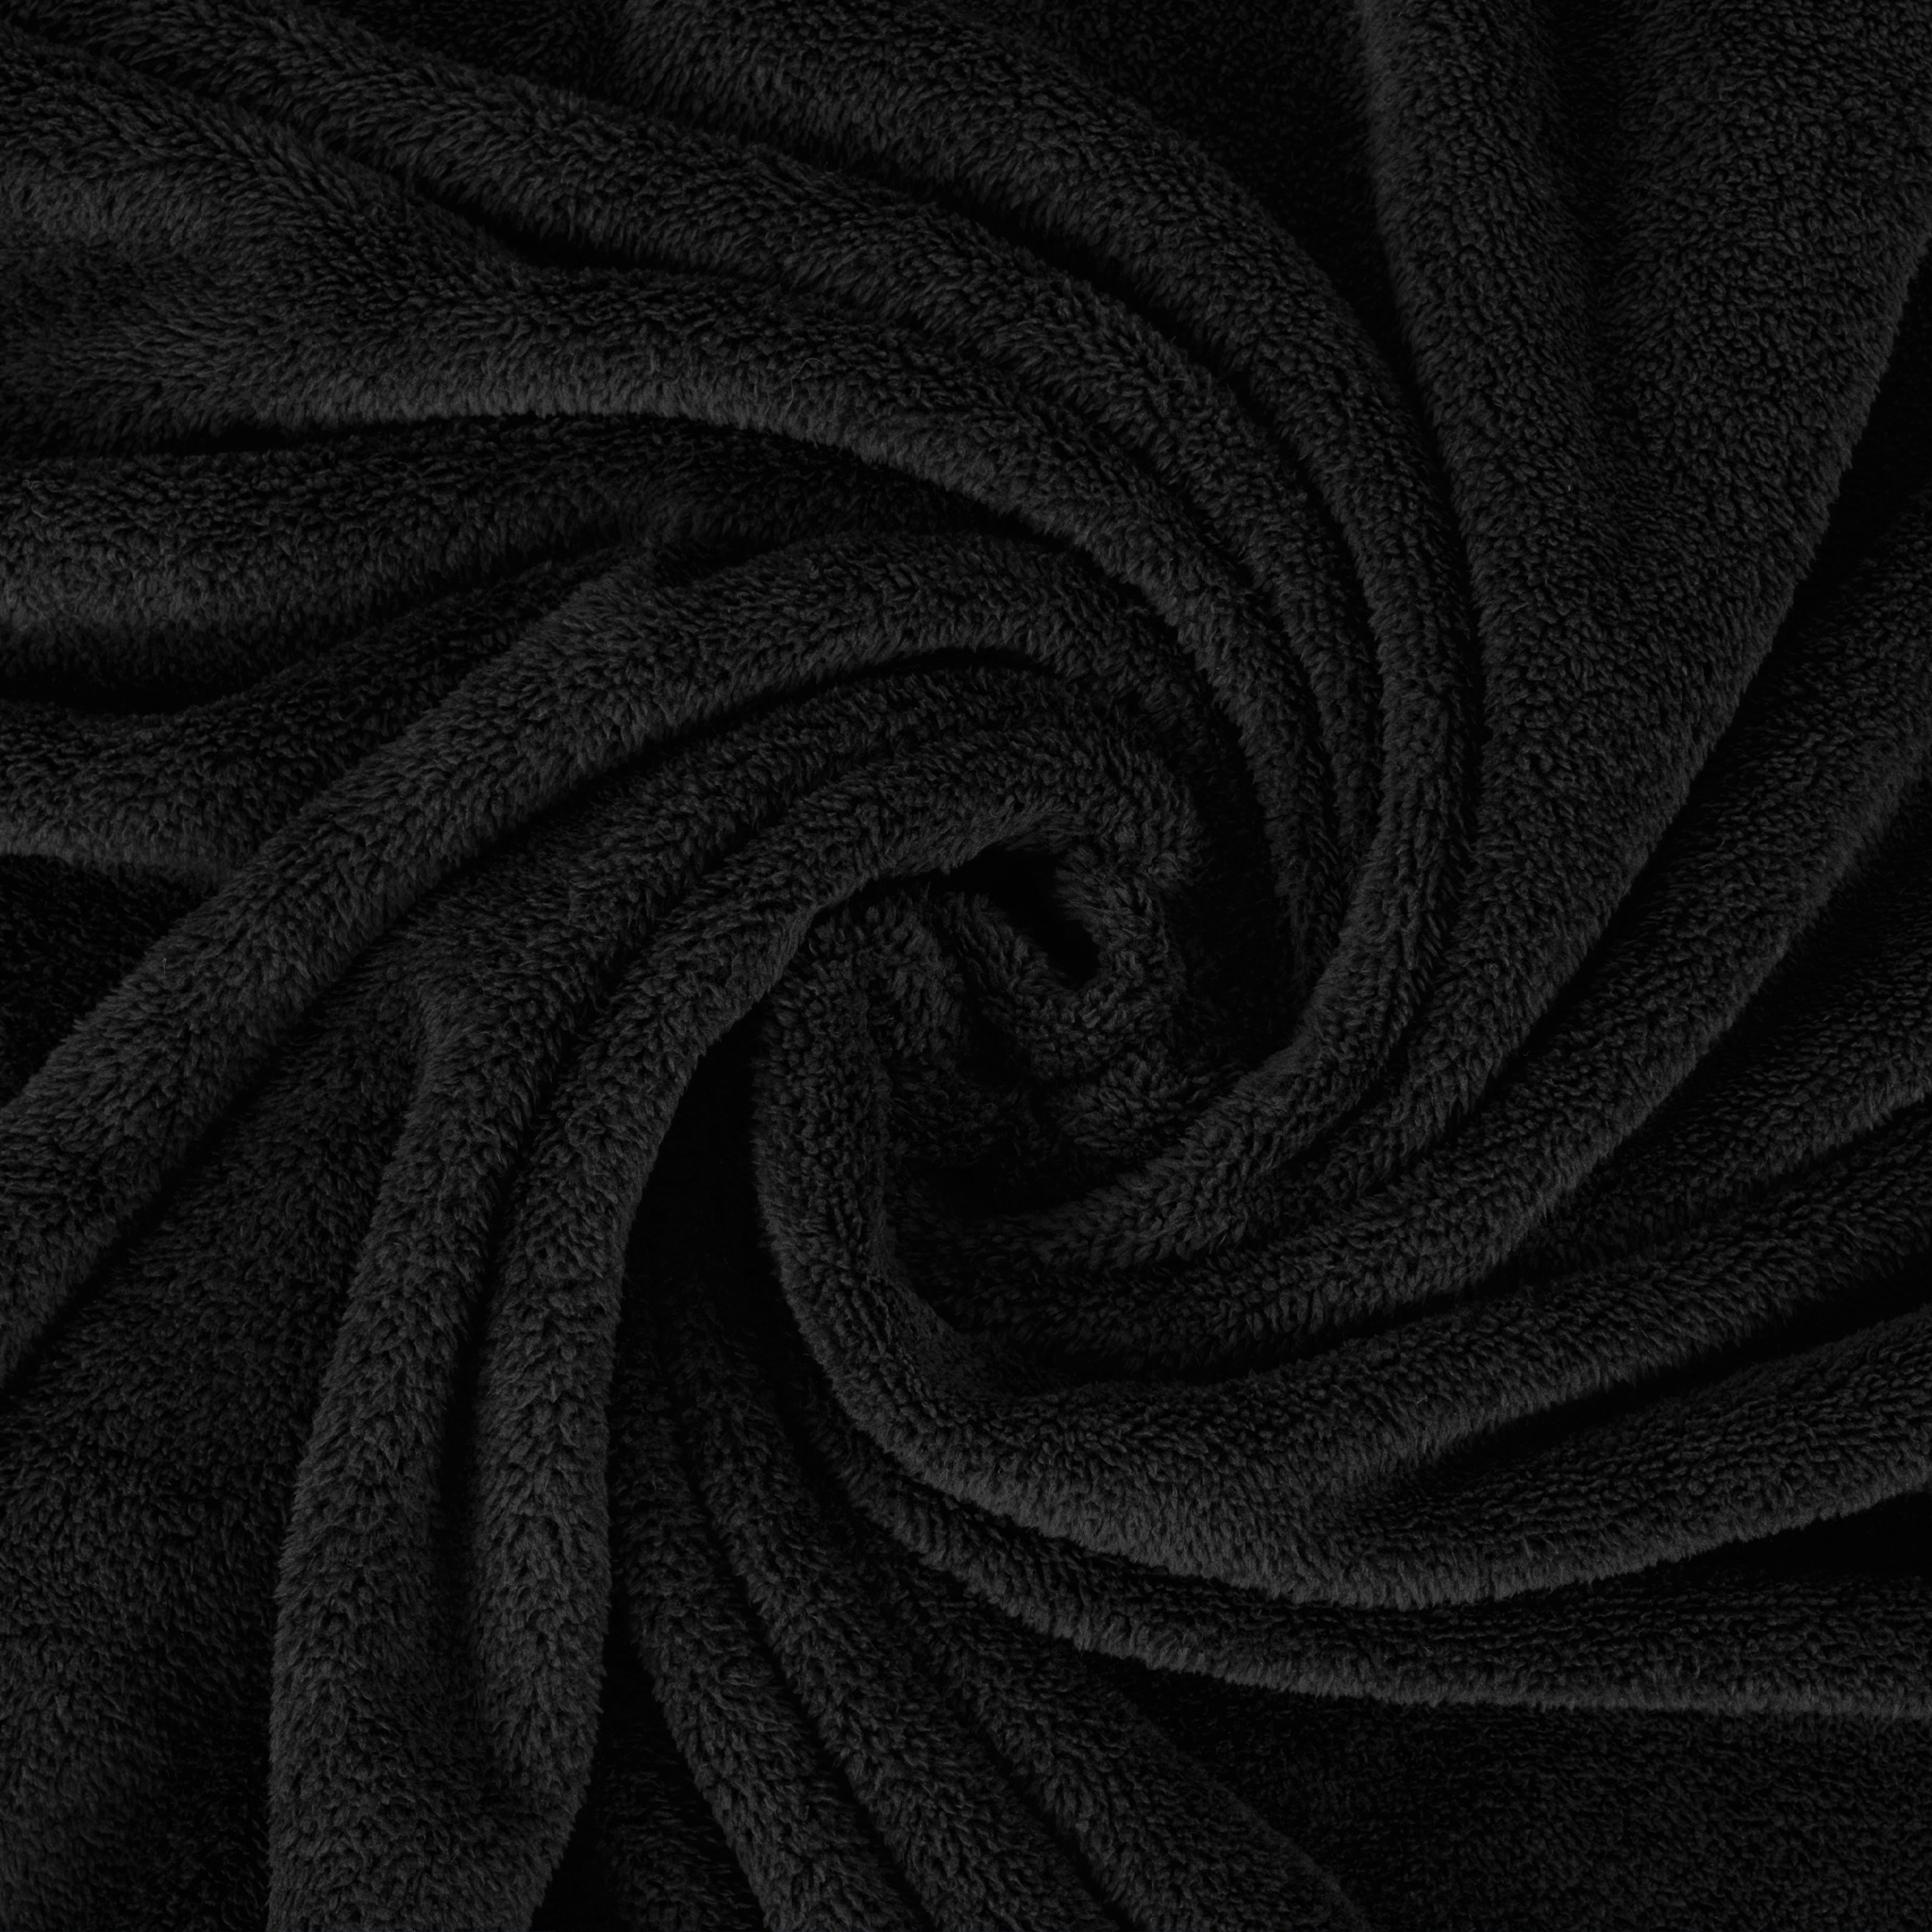 American Soft Linen - Bedding Fleece Blanket - Twin Size 60x80 inches - Black - 5